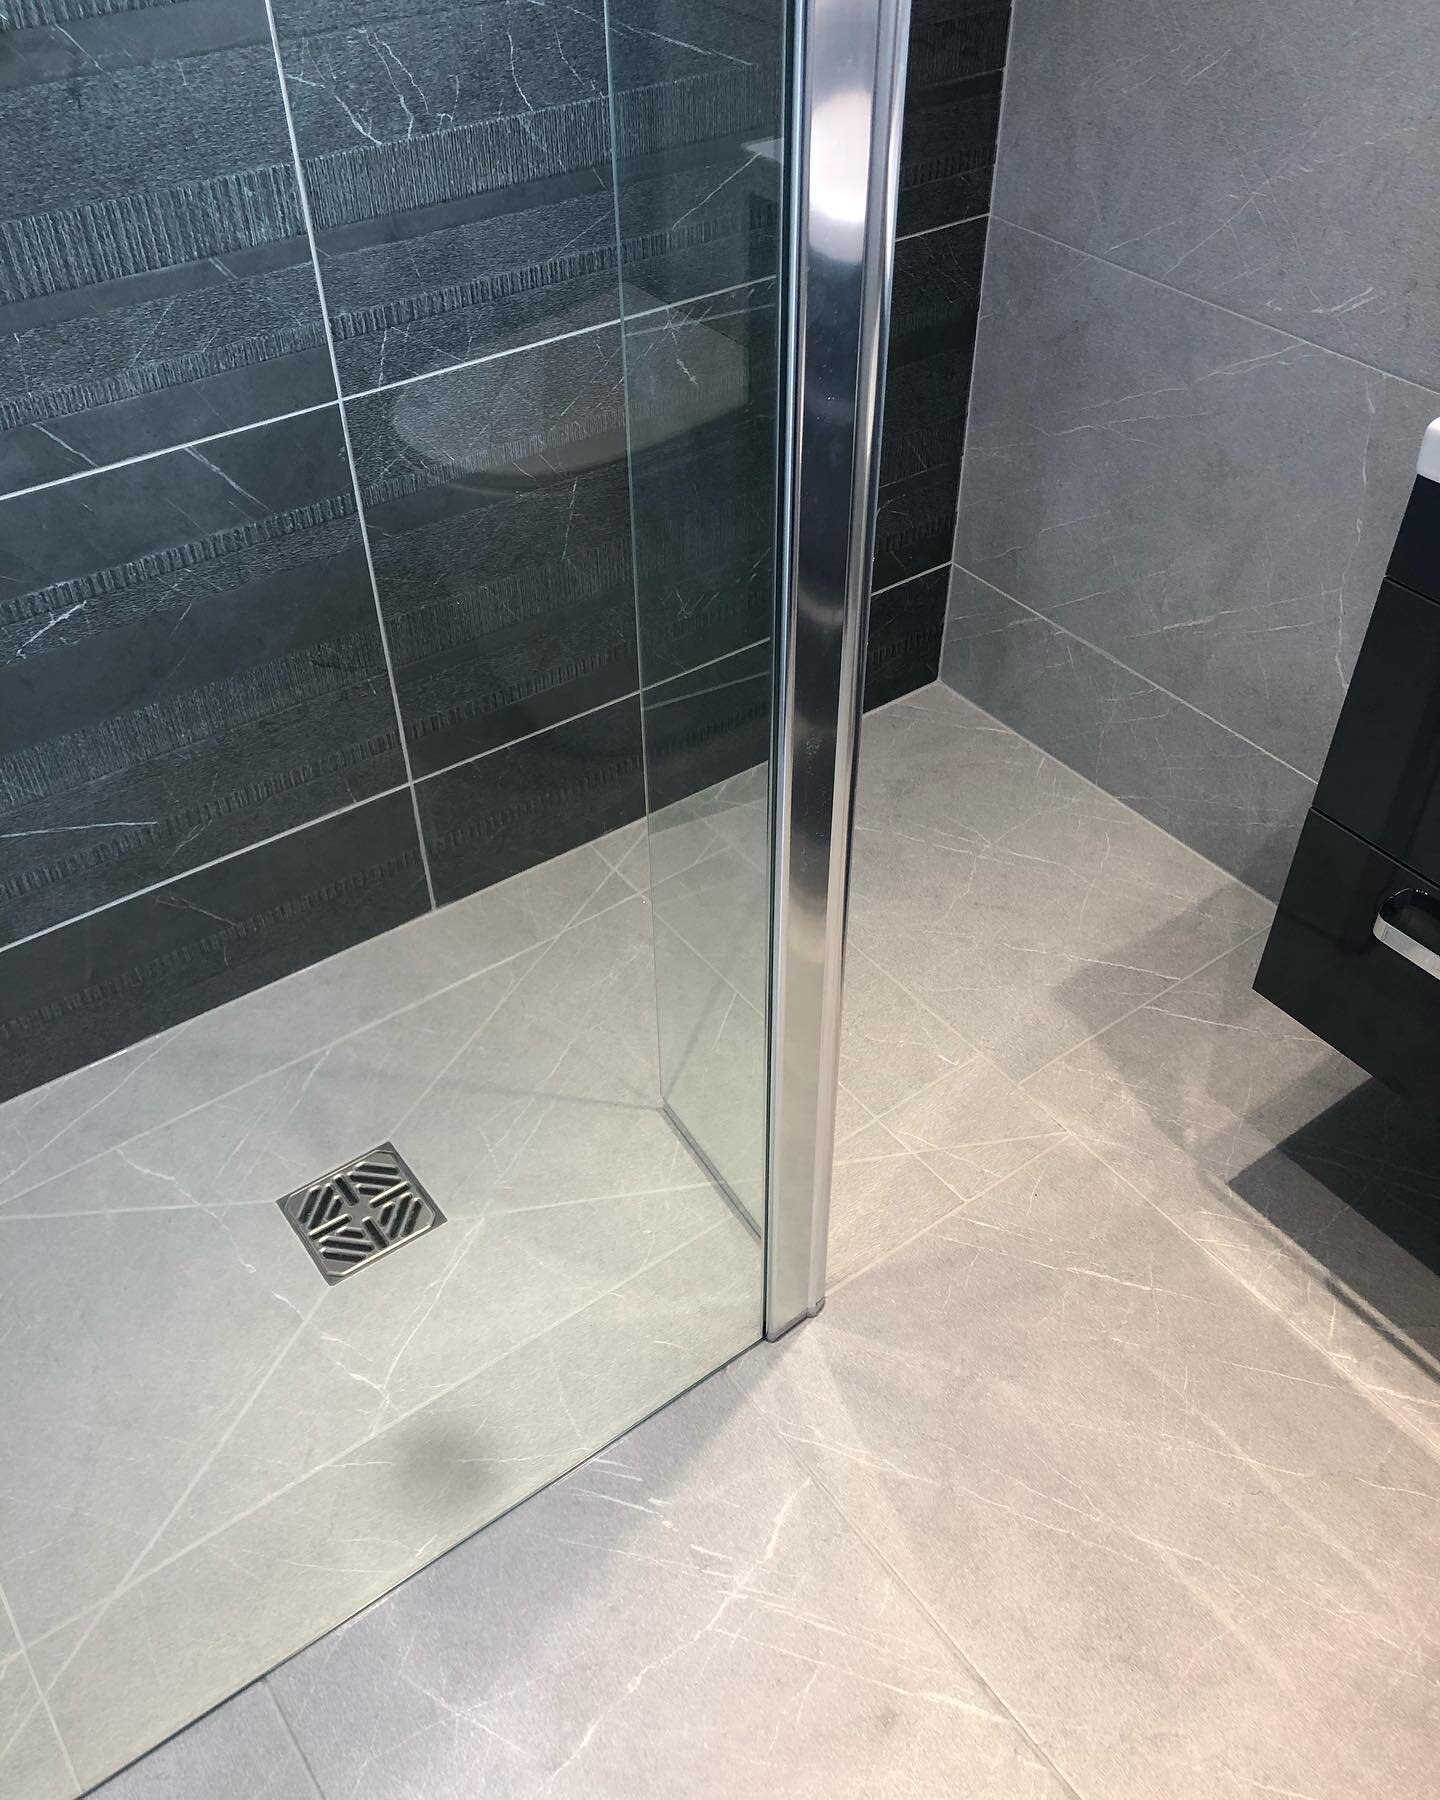 Luxury level access Wetroom just completed. 

900 x 450mm porcelain tiles. 

Wetdeck cut to perfection 

Amazing job

#Bathfit #bathrooms #bathroomdesign #plumbing #tiling #wetrooms #showers #tiler #bathroominstaller #bathroomremodel #bathroomdecor #